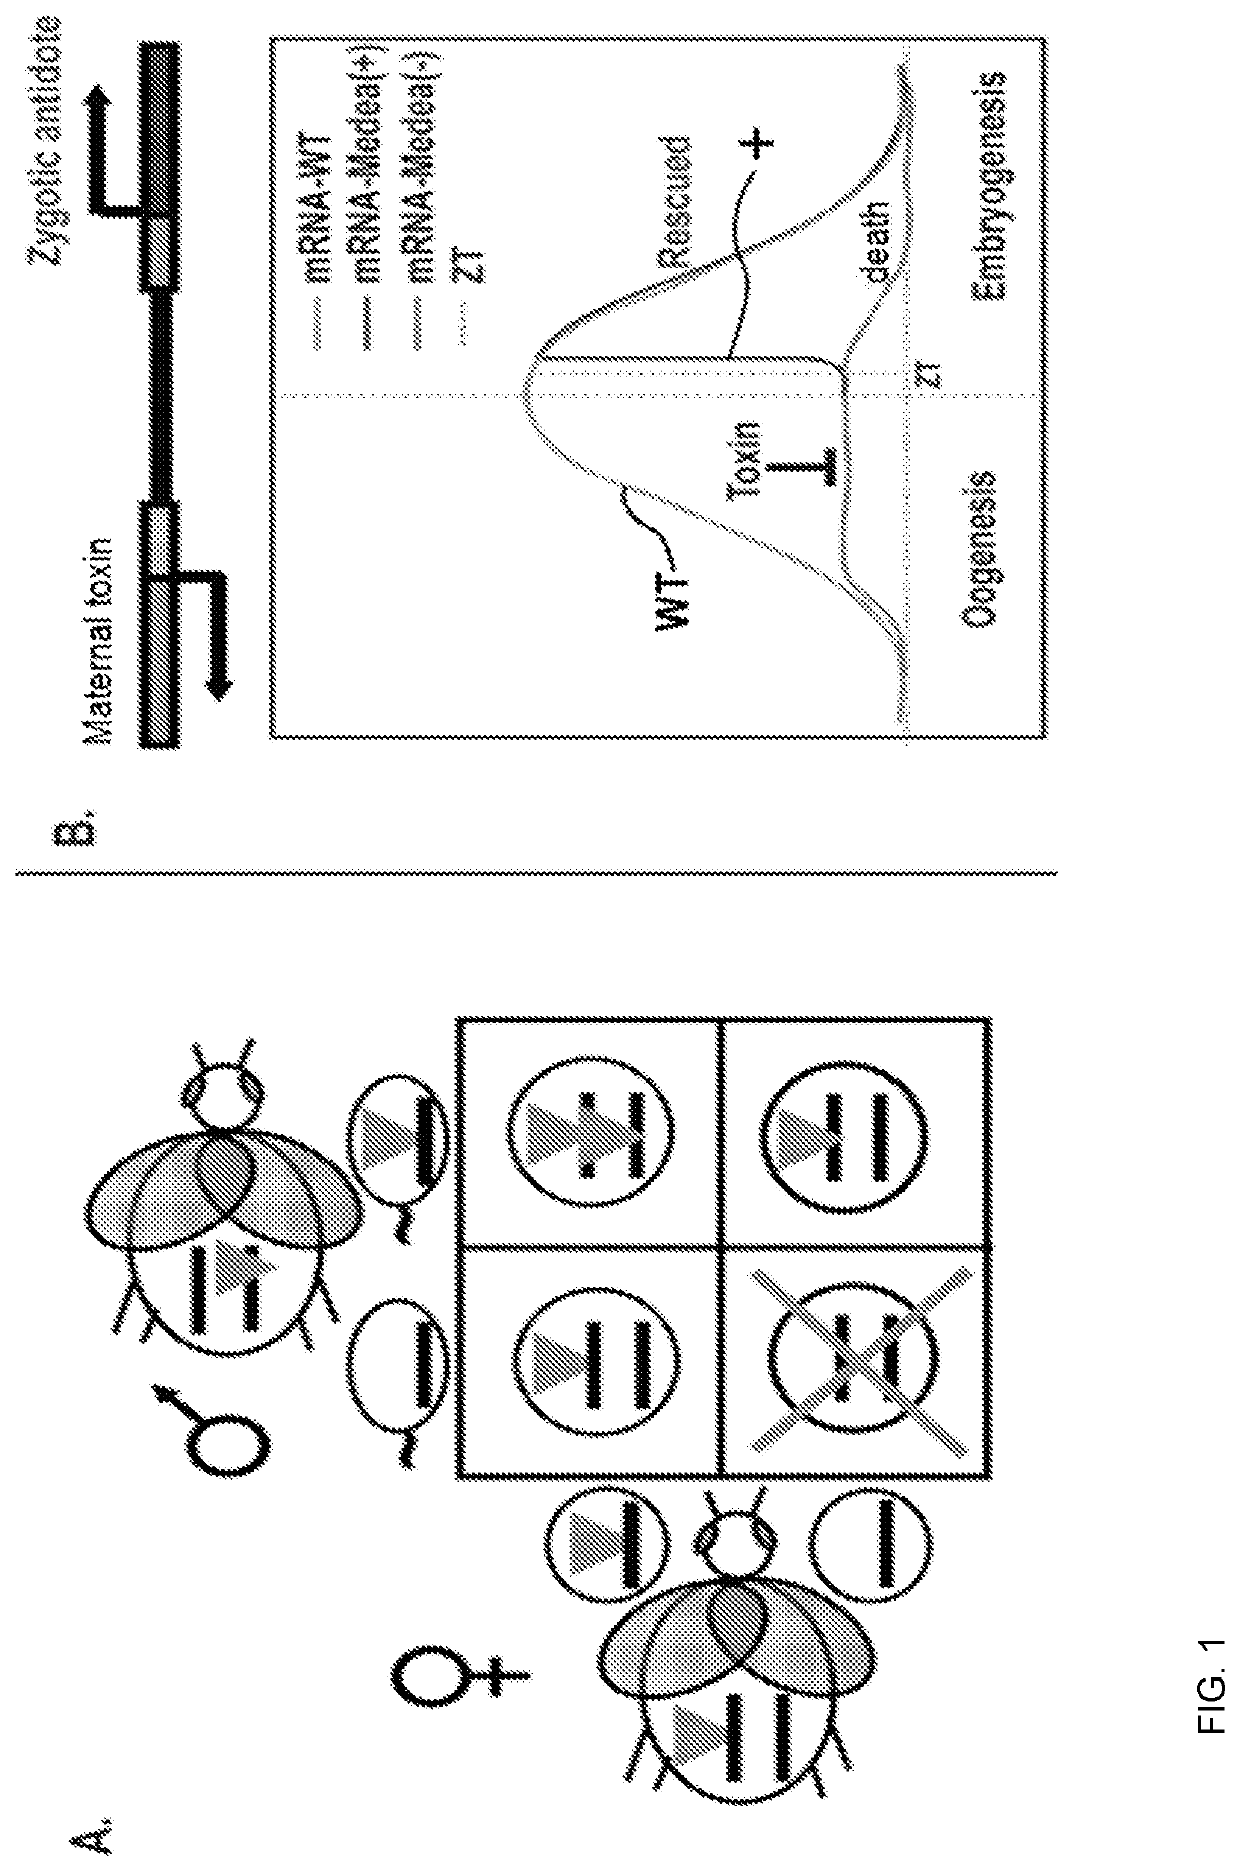 Use of medea elements for biocontrol of d. suzukii populations